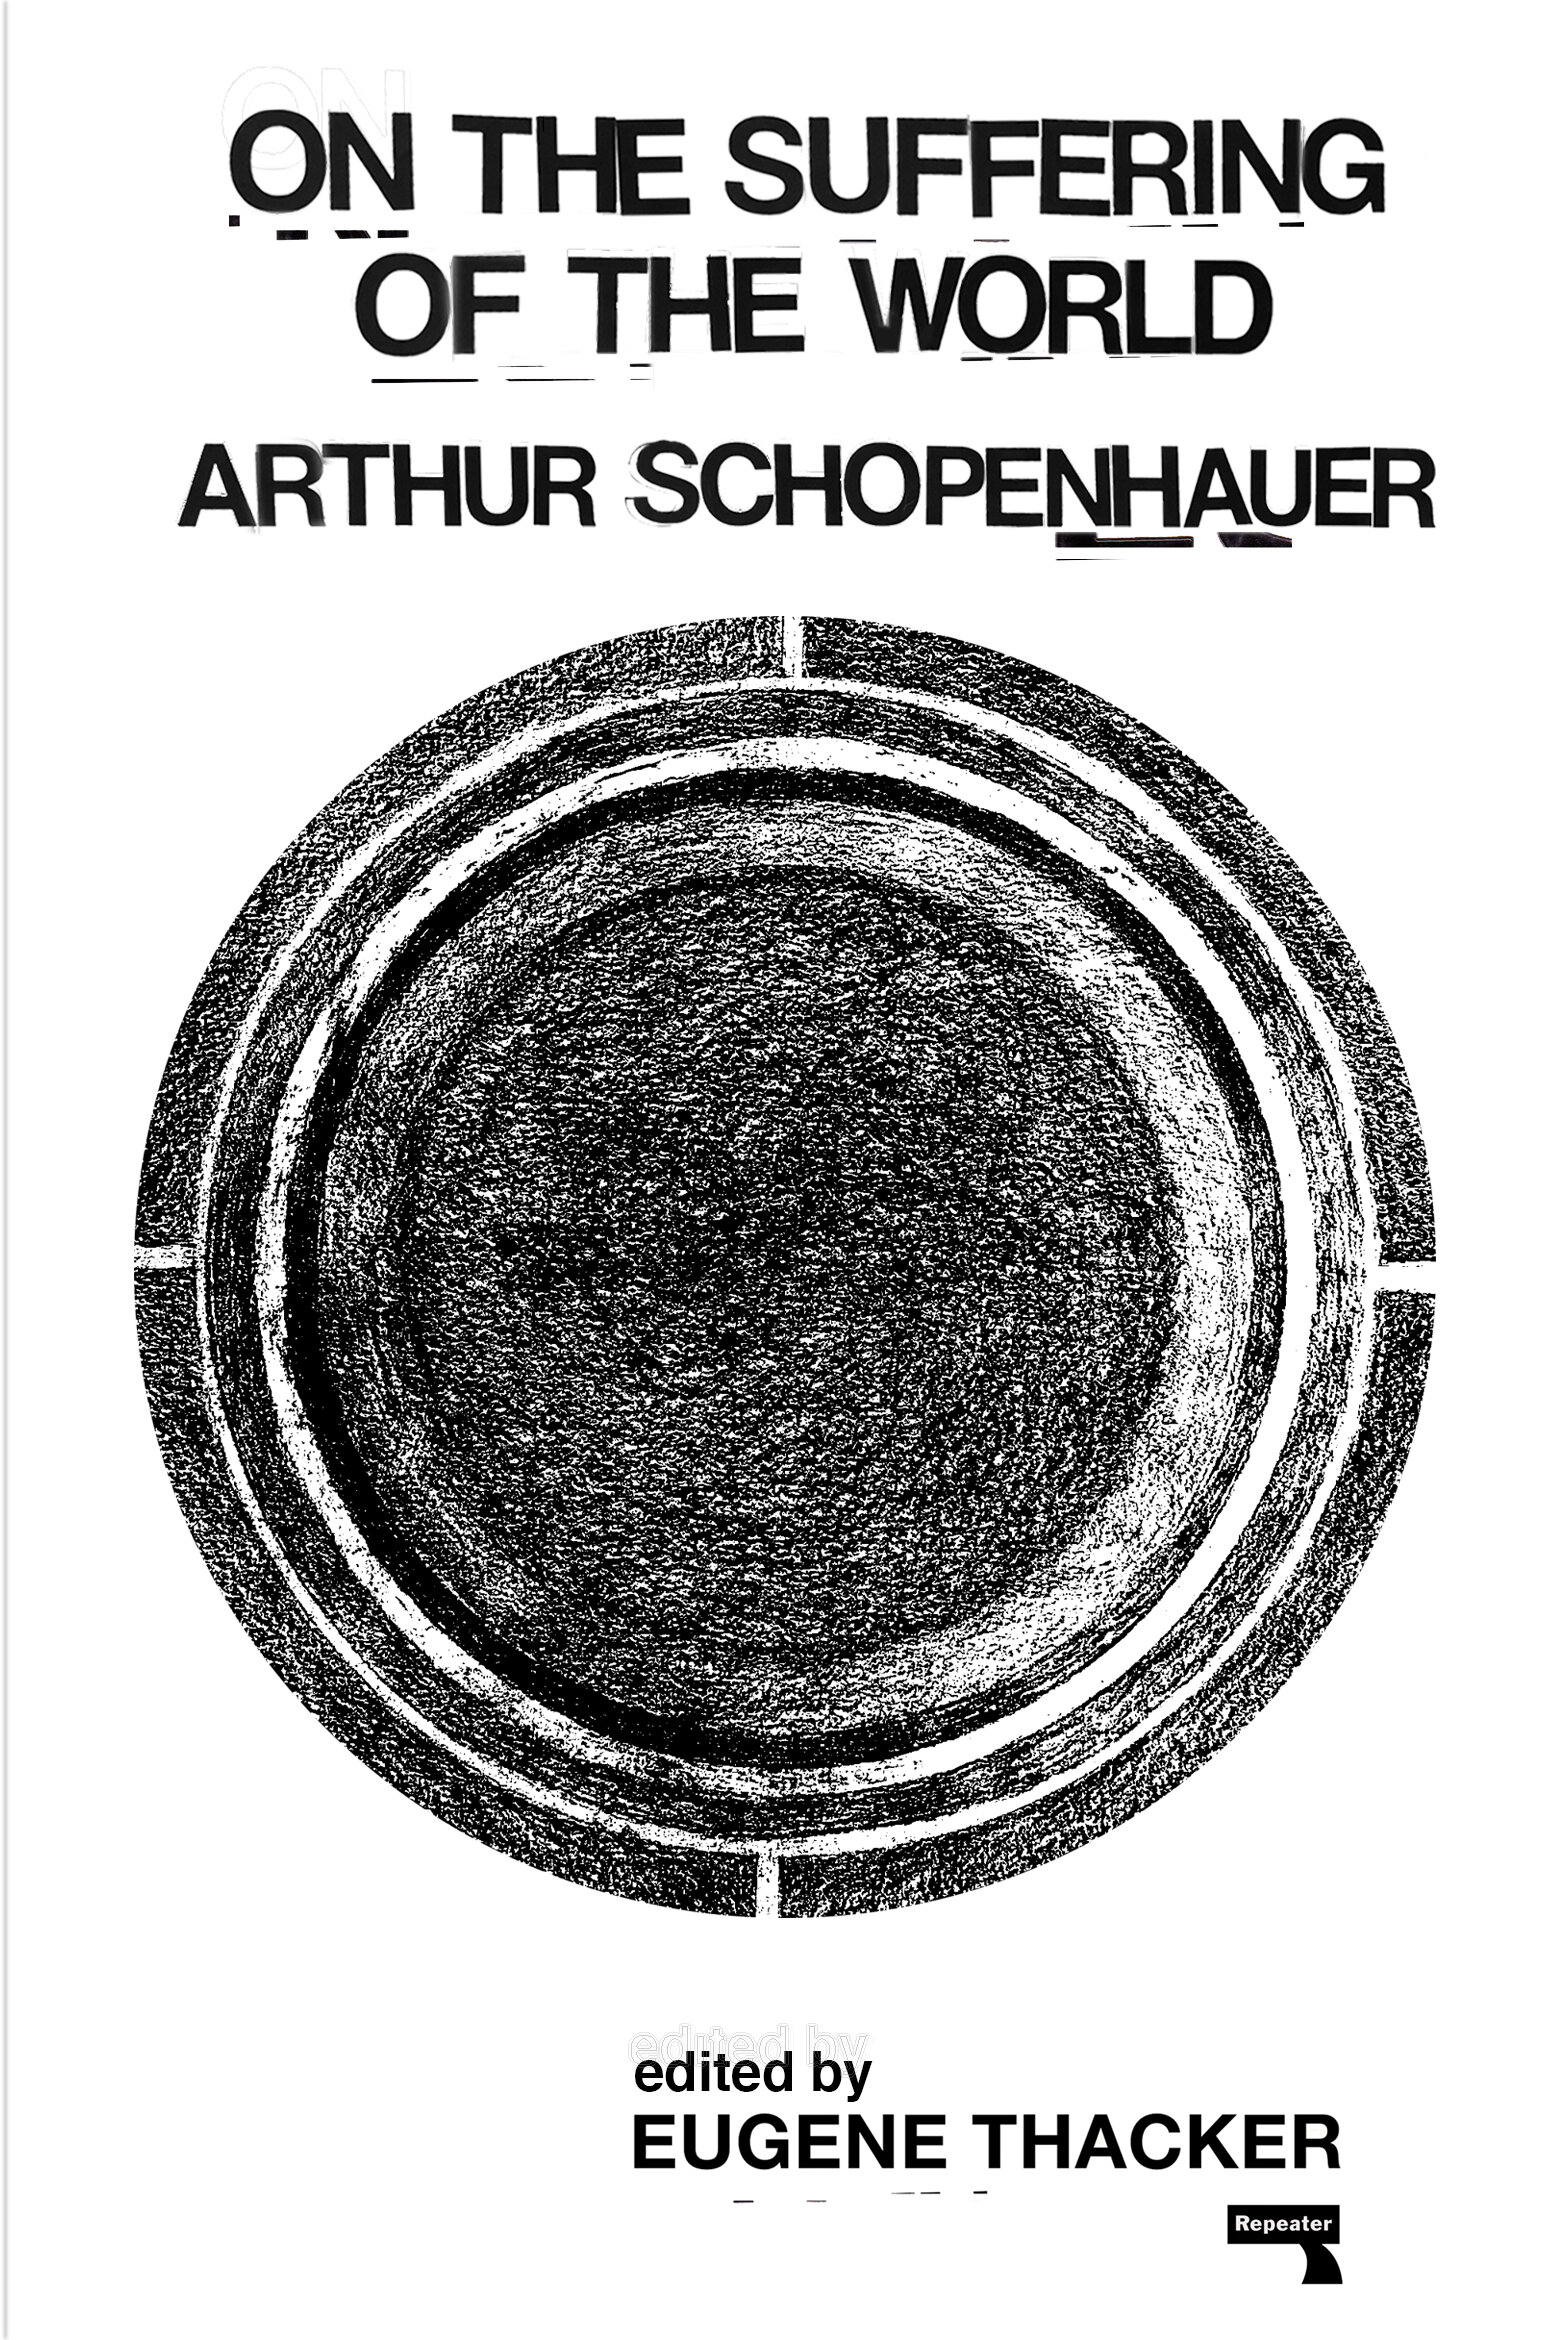 SCHOPENHAUER THACKER COVER FRONT.jpg